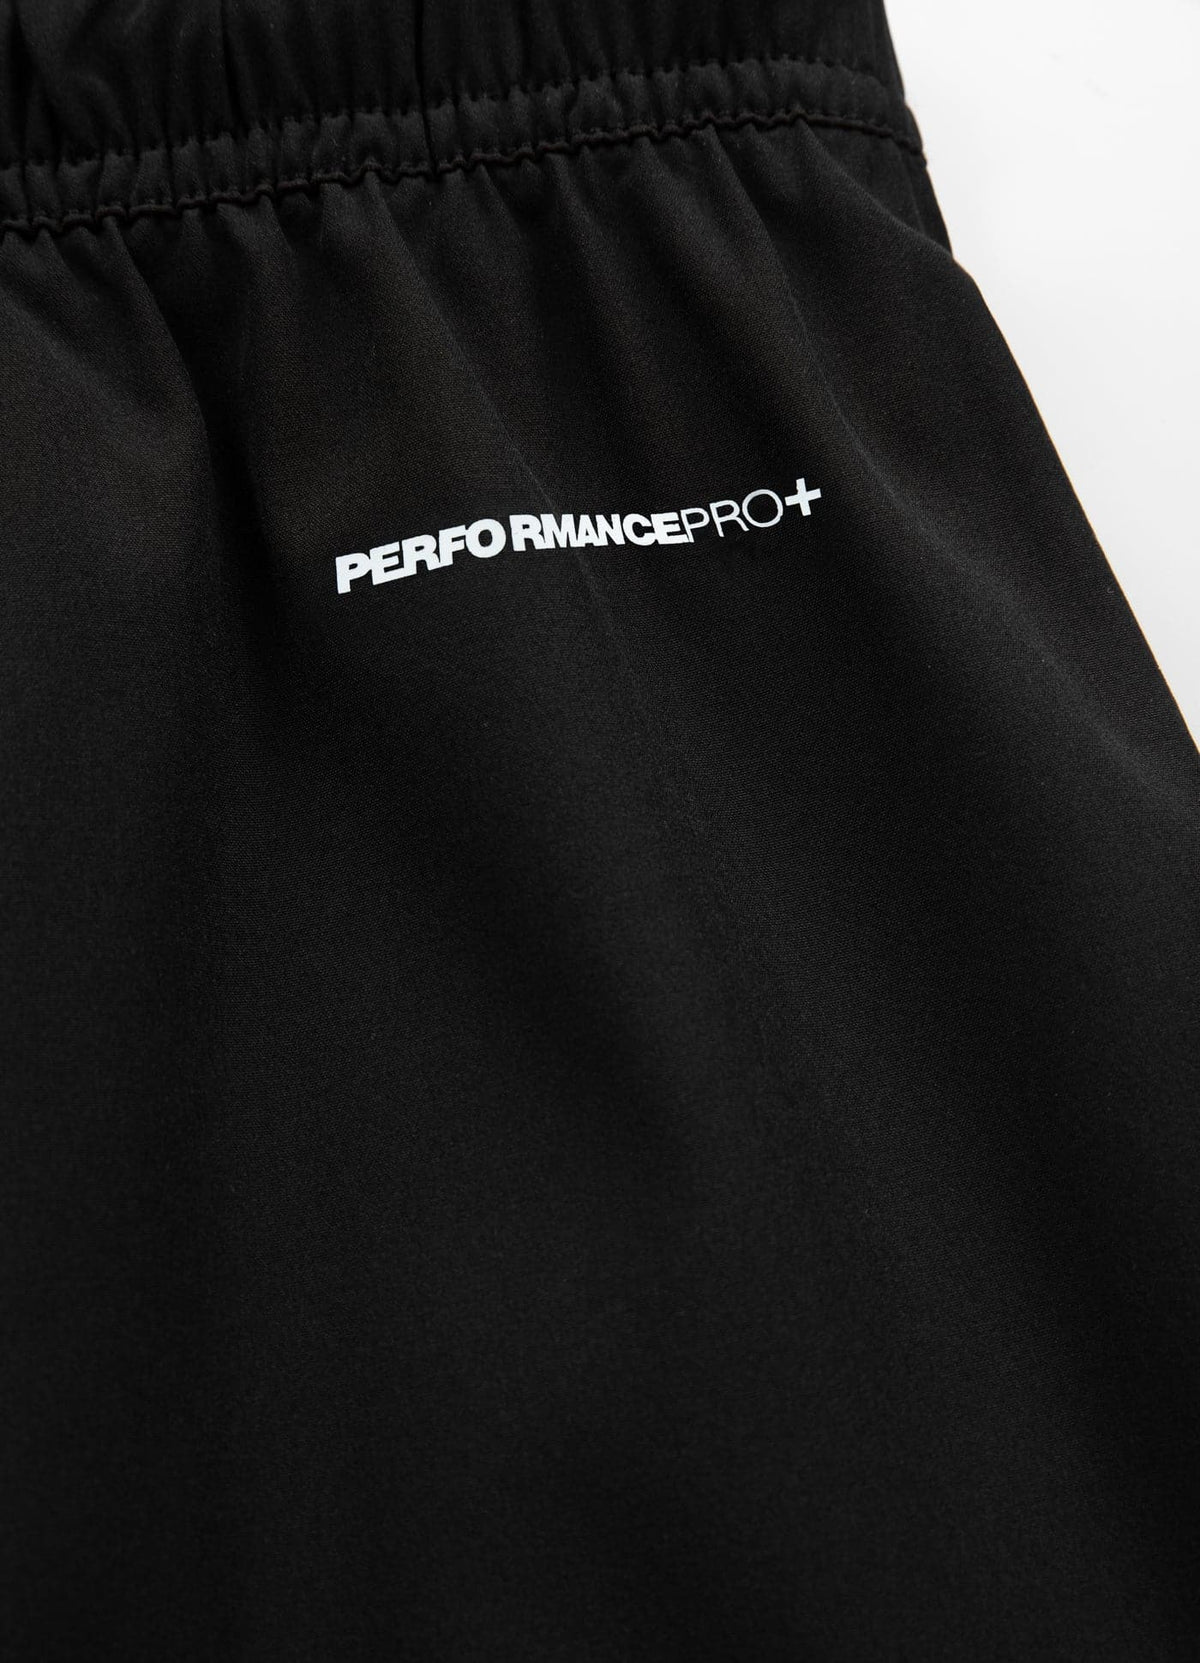 ADCC Black Performance Shorts - Pitbullstore.eu